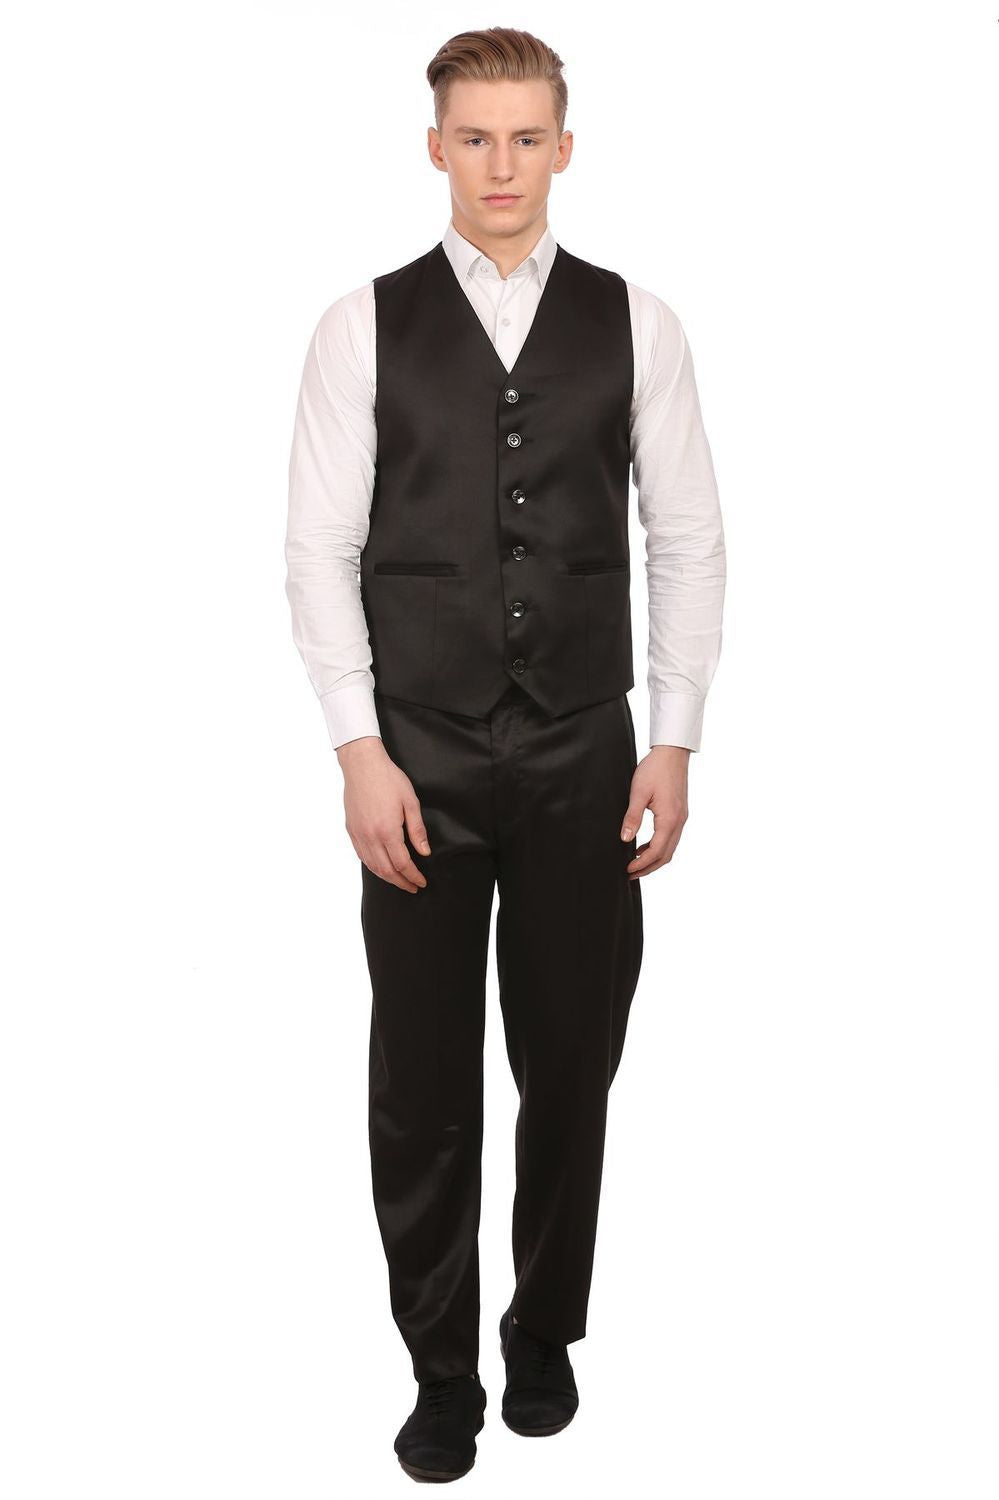 Poly Blend Black Tuxedo Vest and Pant Set